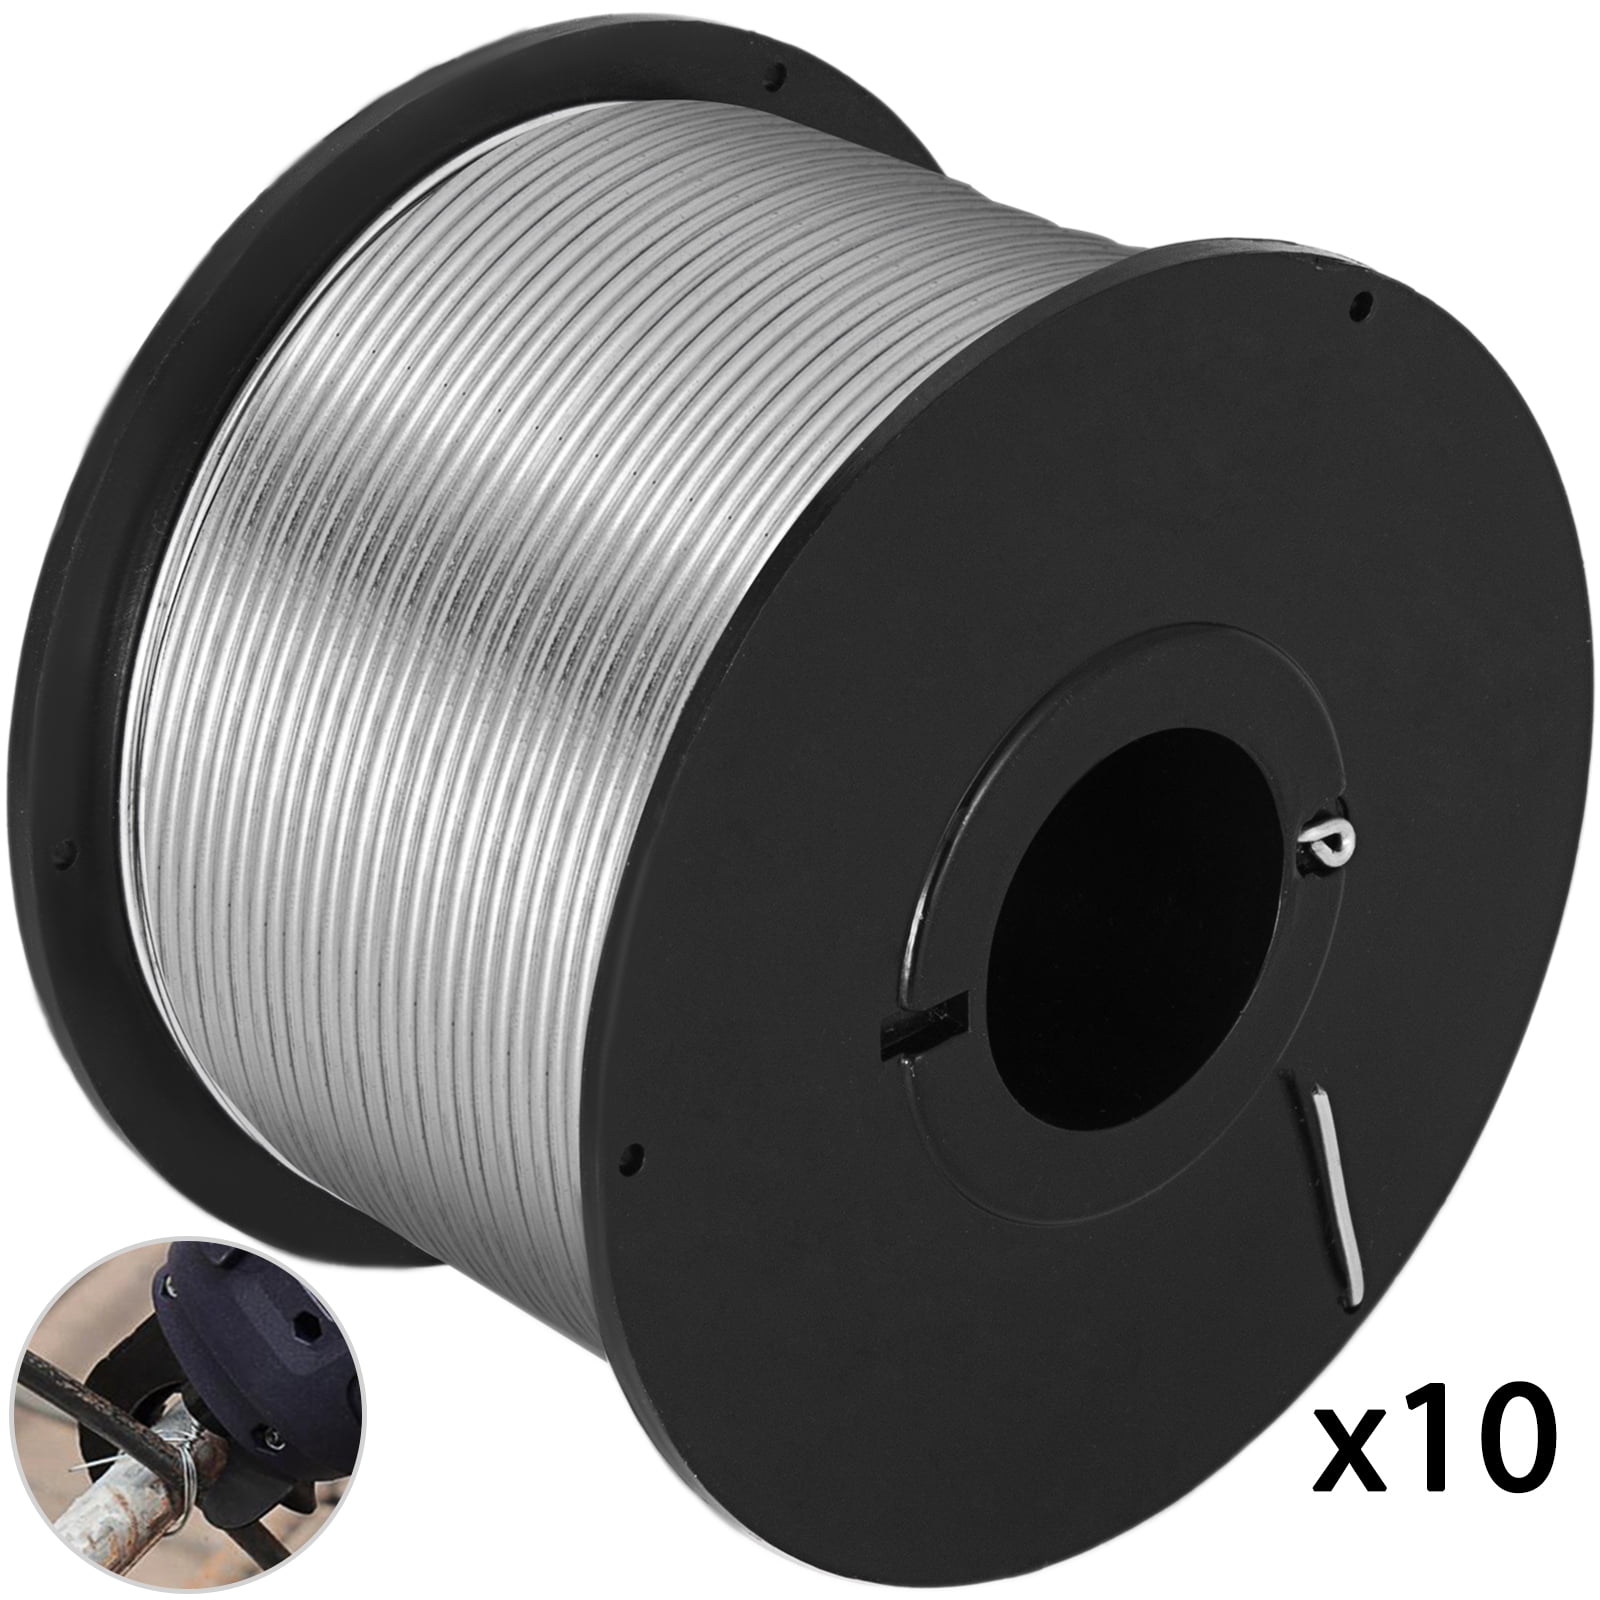 Hobby Wire for Roll Rebar Tying Rebar Tool Steel Tie Wire Flexible Multi-Purpose 4pcs 110m Length Rebar Tying Wire